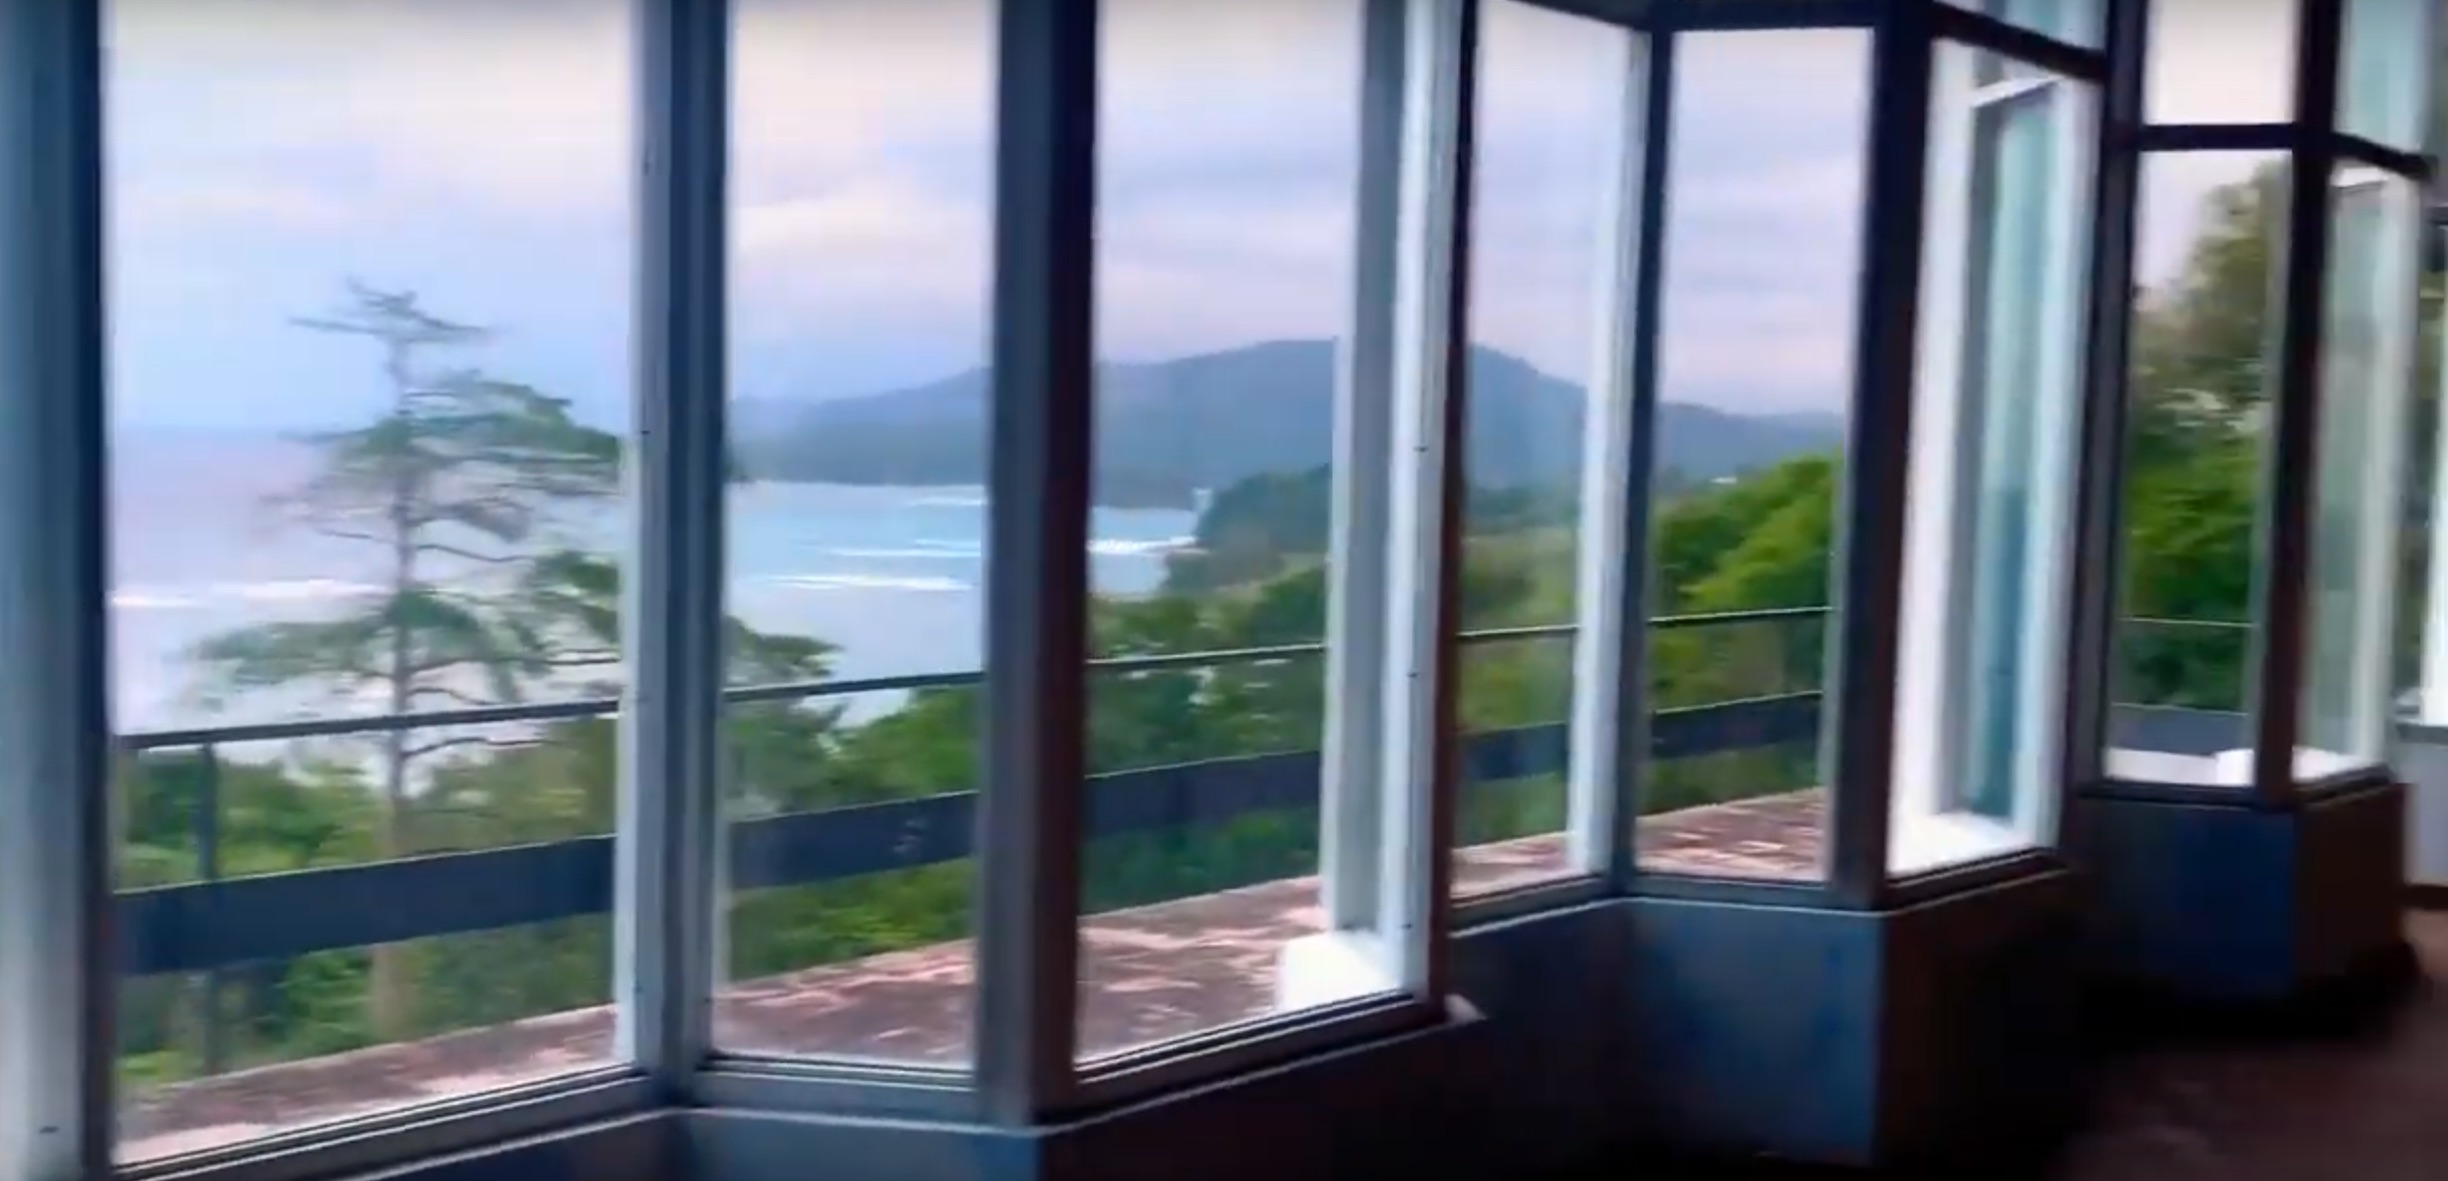 Rita Marley - Port Maria Jamaica - Studio Window and outdoor recording balcony